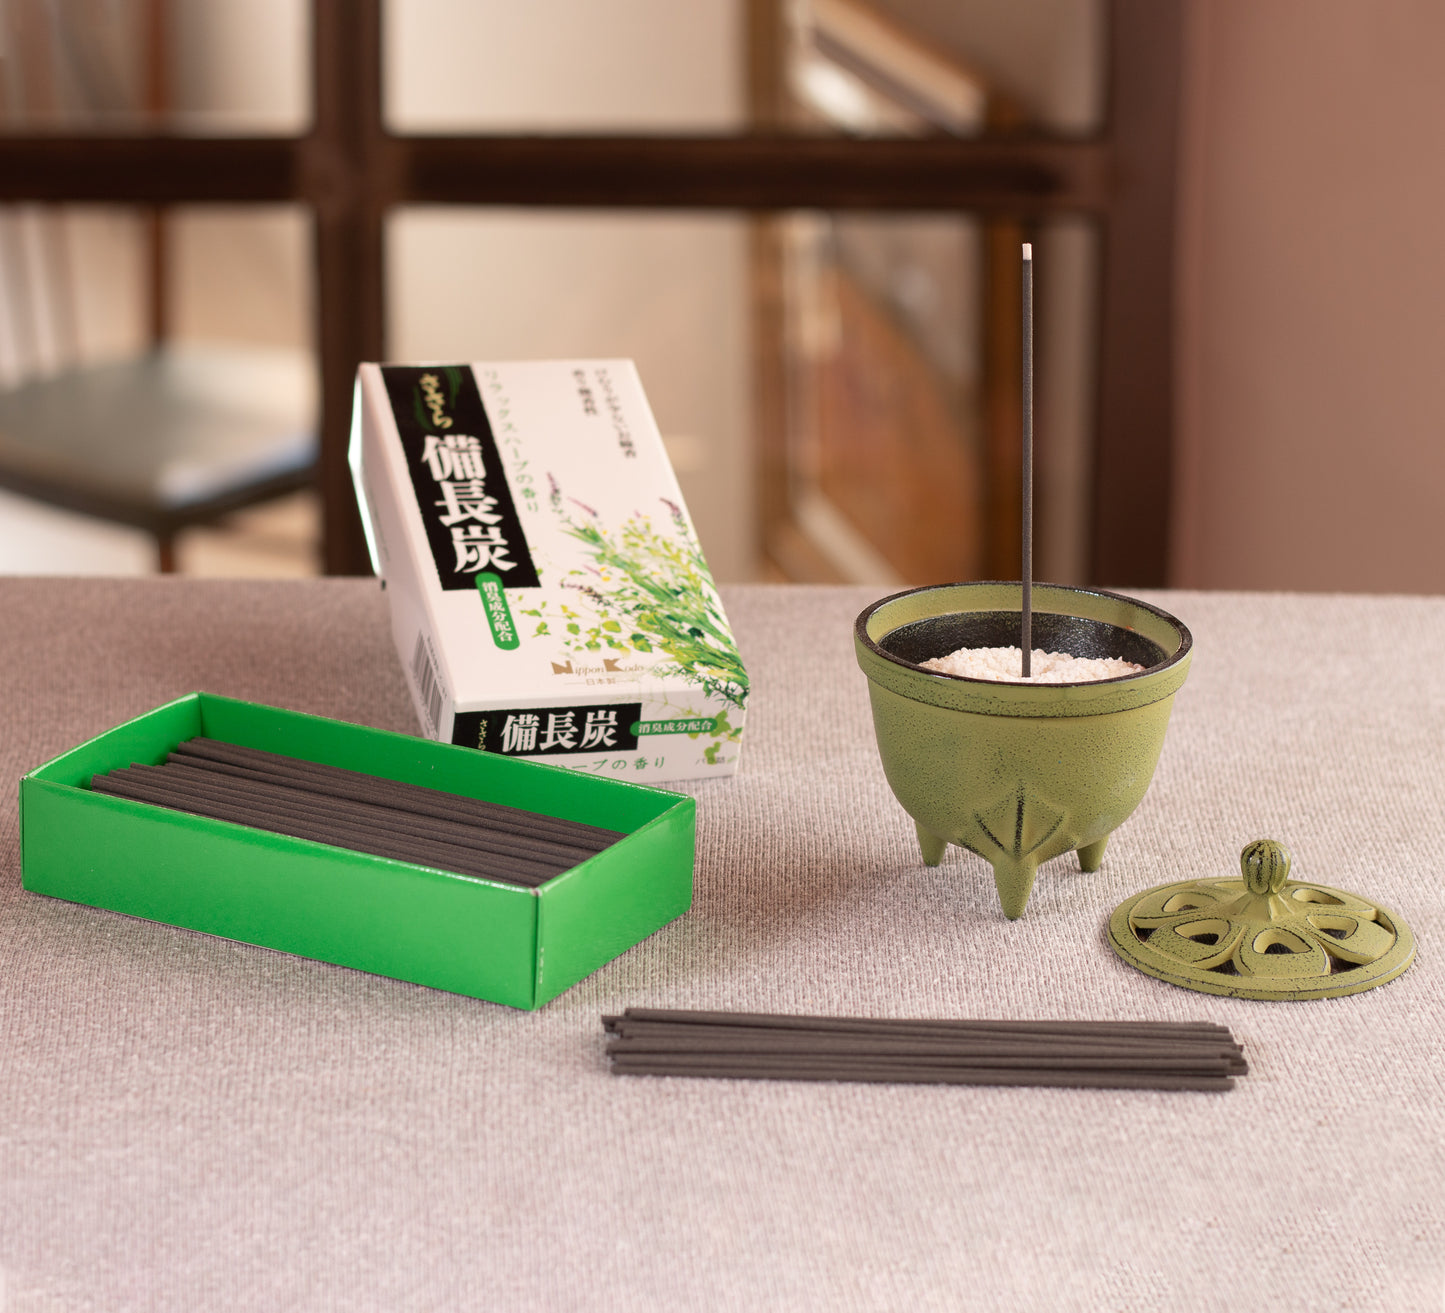 Sasara Binchotan Incense - Relax Herb, Large Box